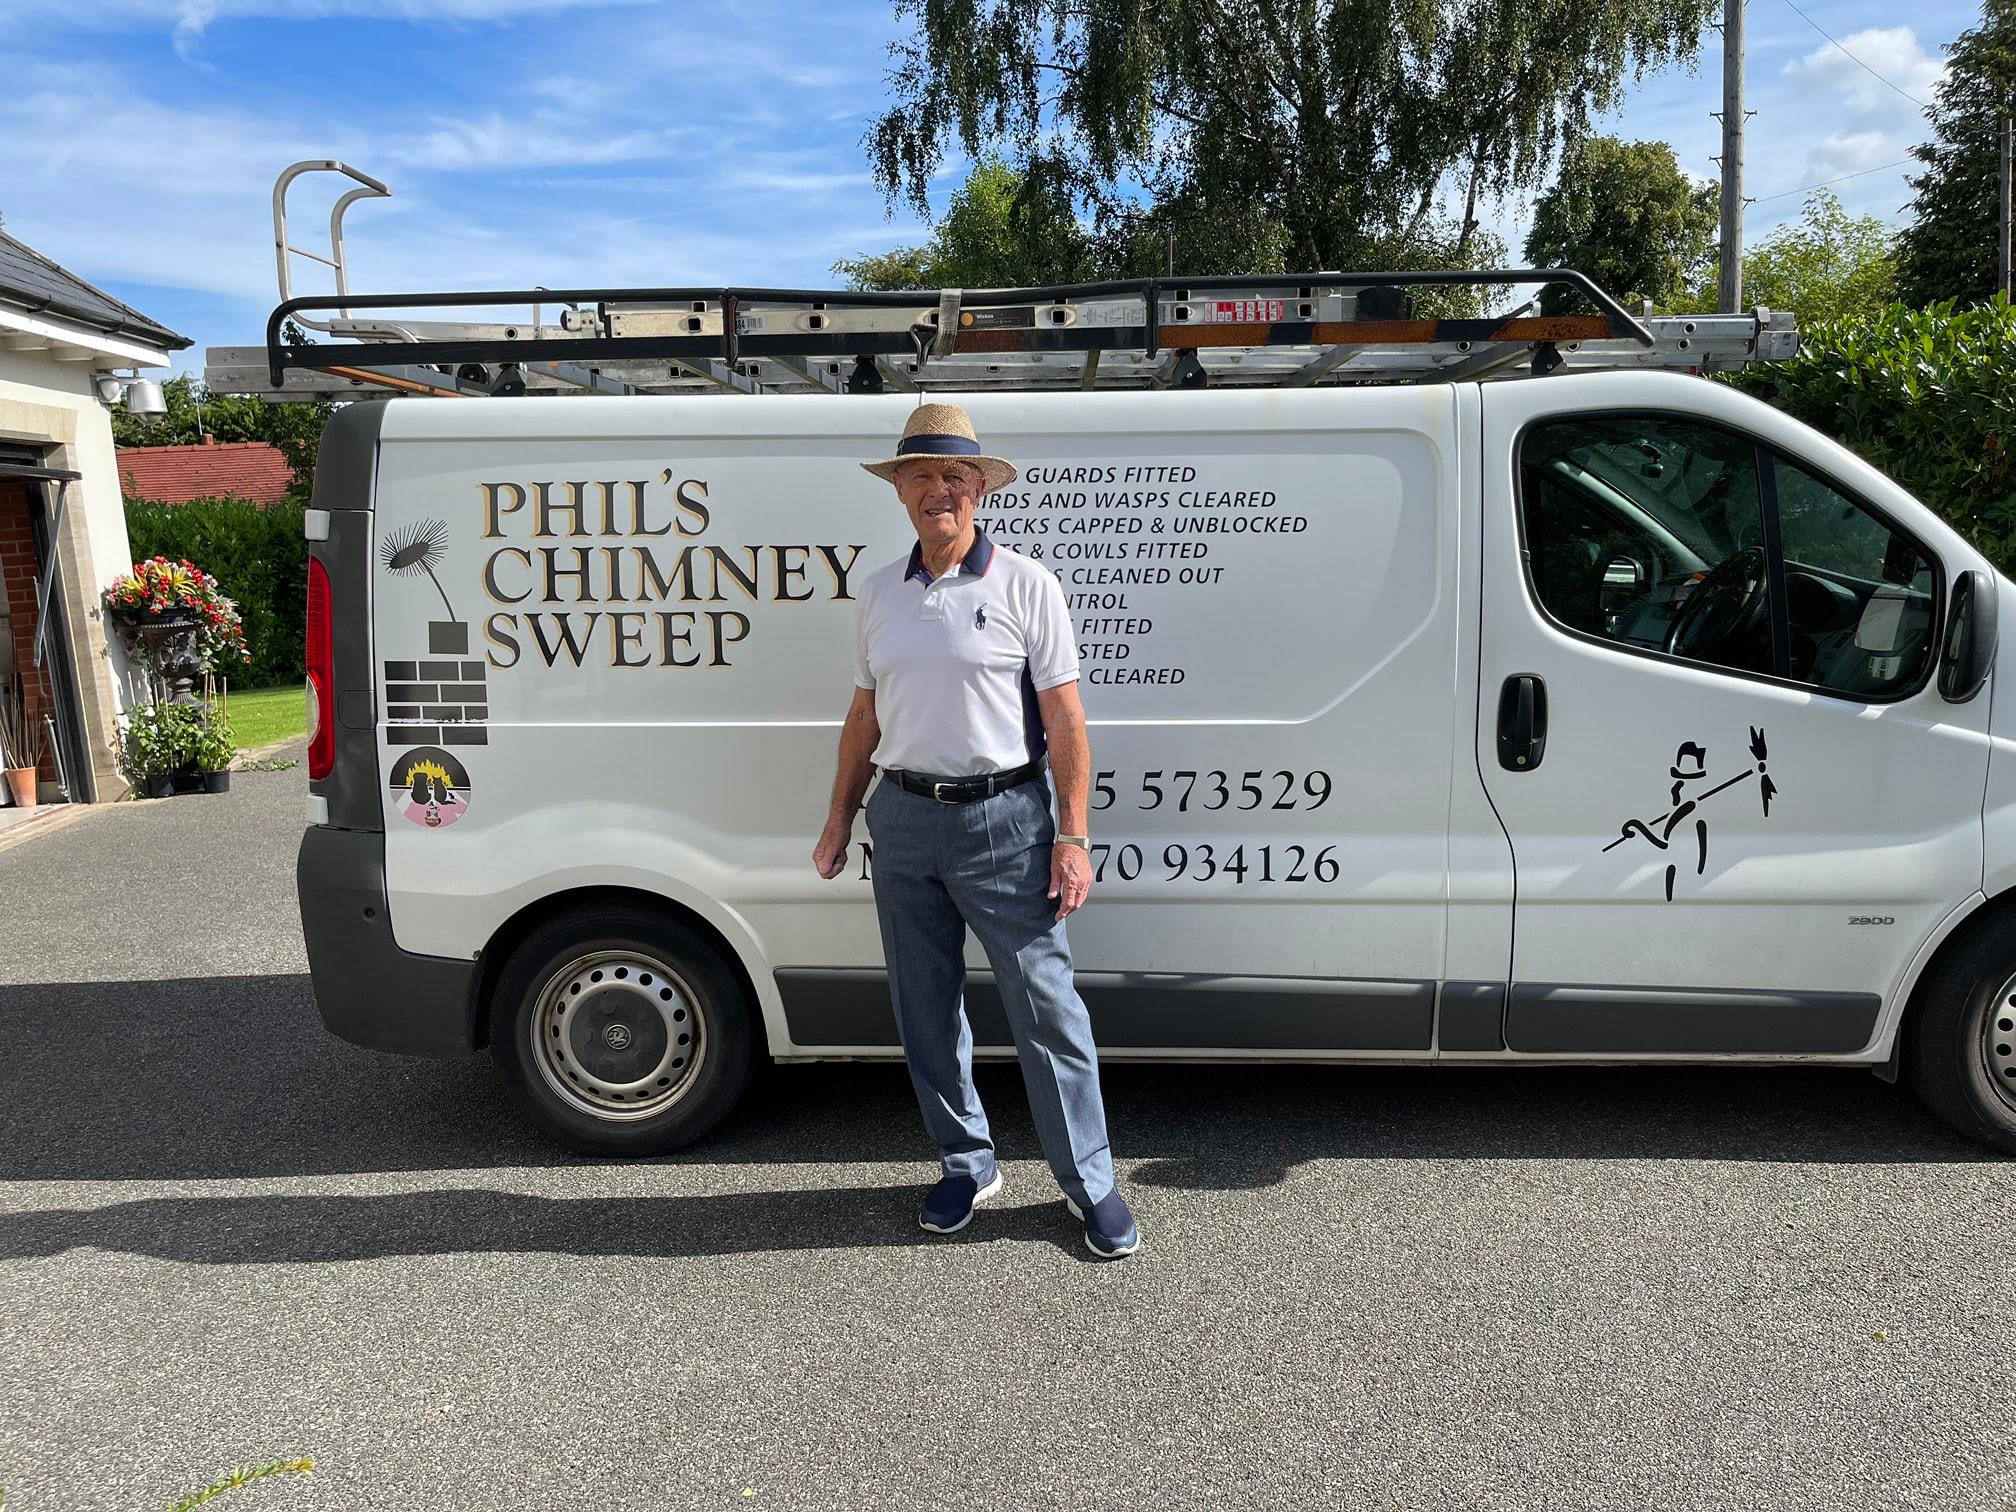 Phil's Chimney Sweep Macclesfield 07970 934126